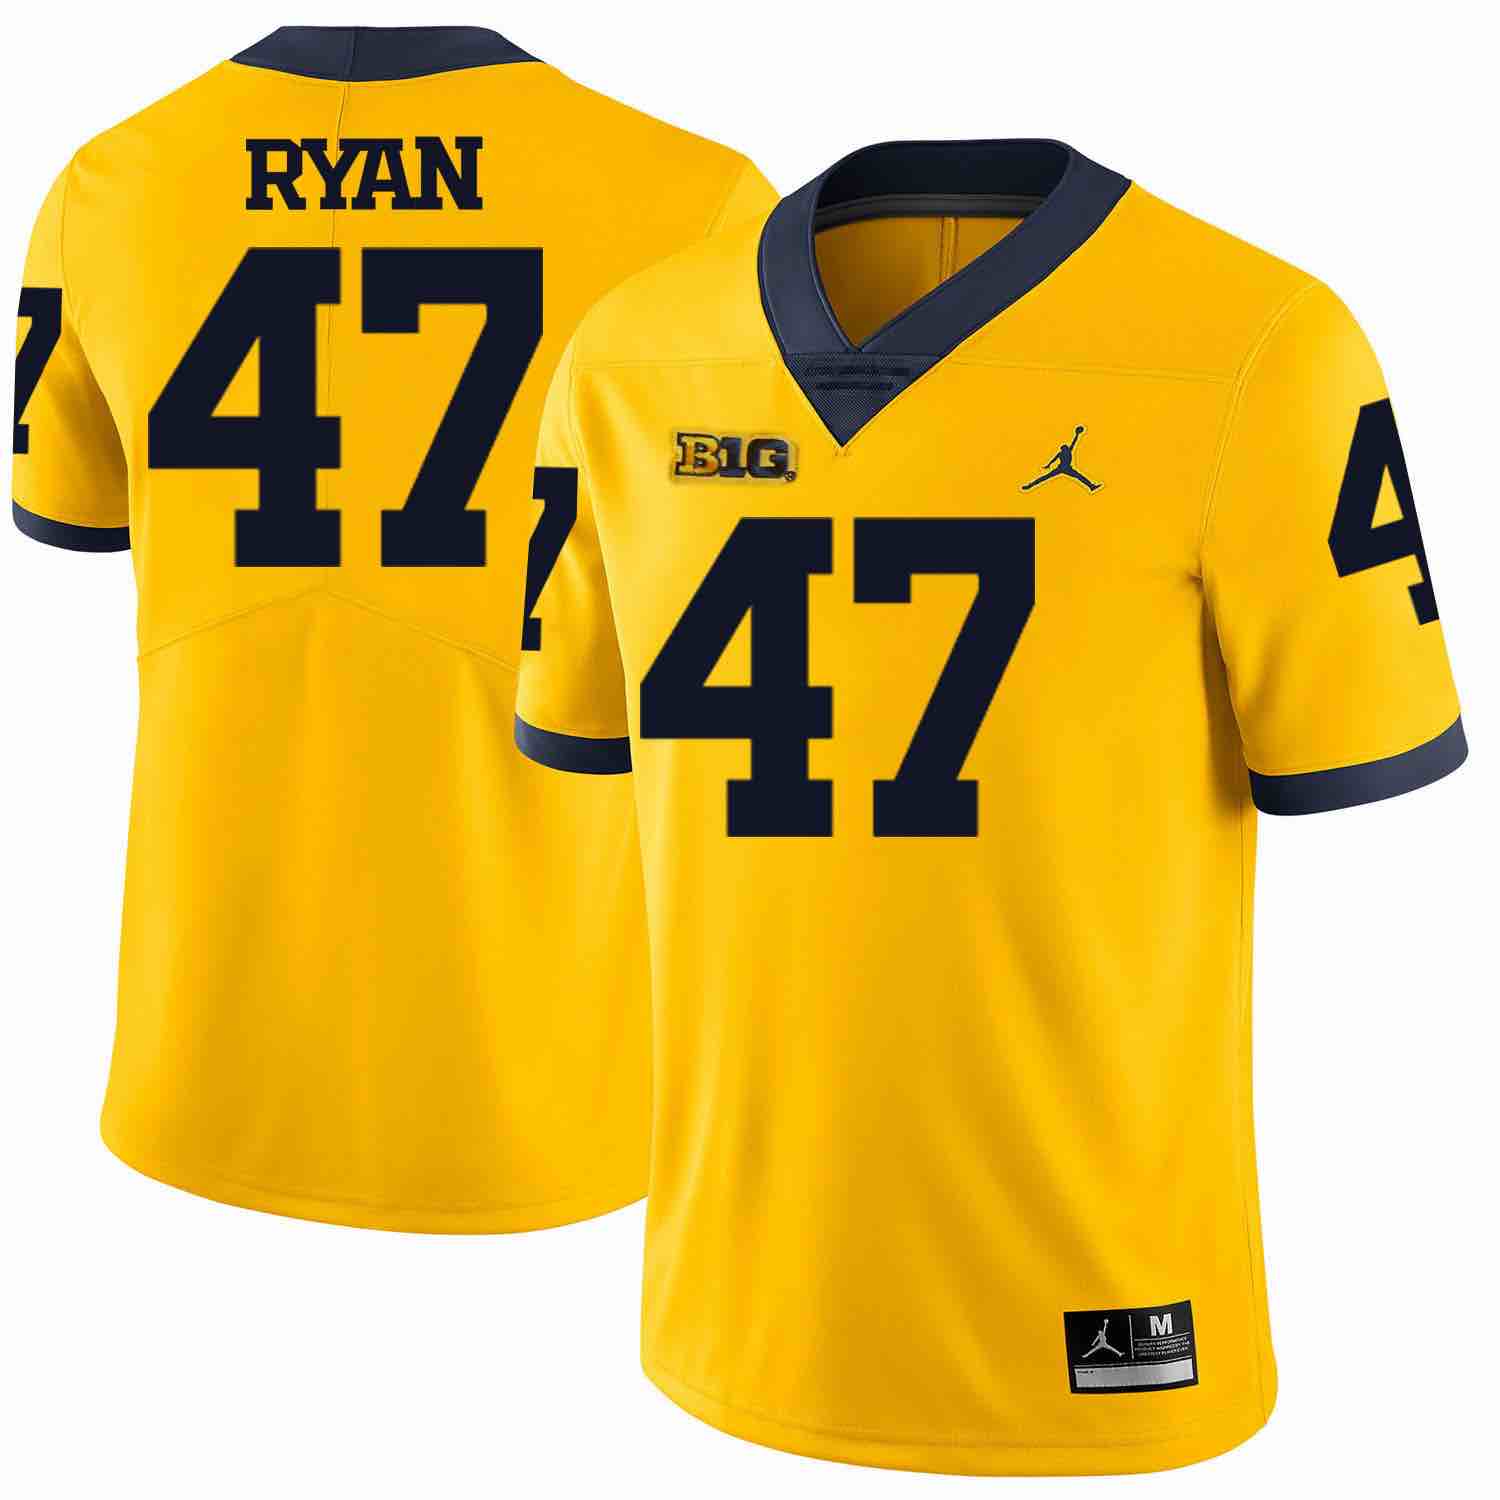 NCAA Michigan Wolverines #47 Ryan Yellow Football Jersey